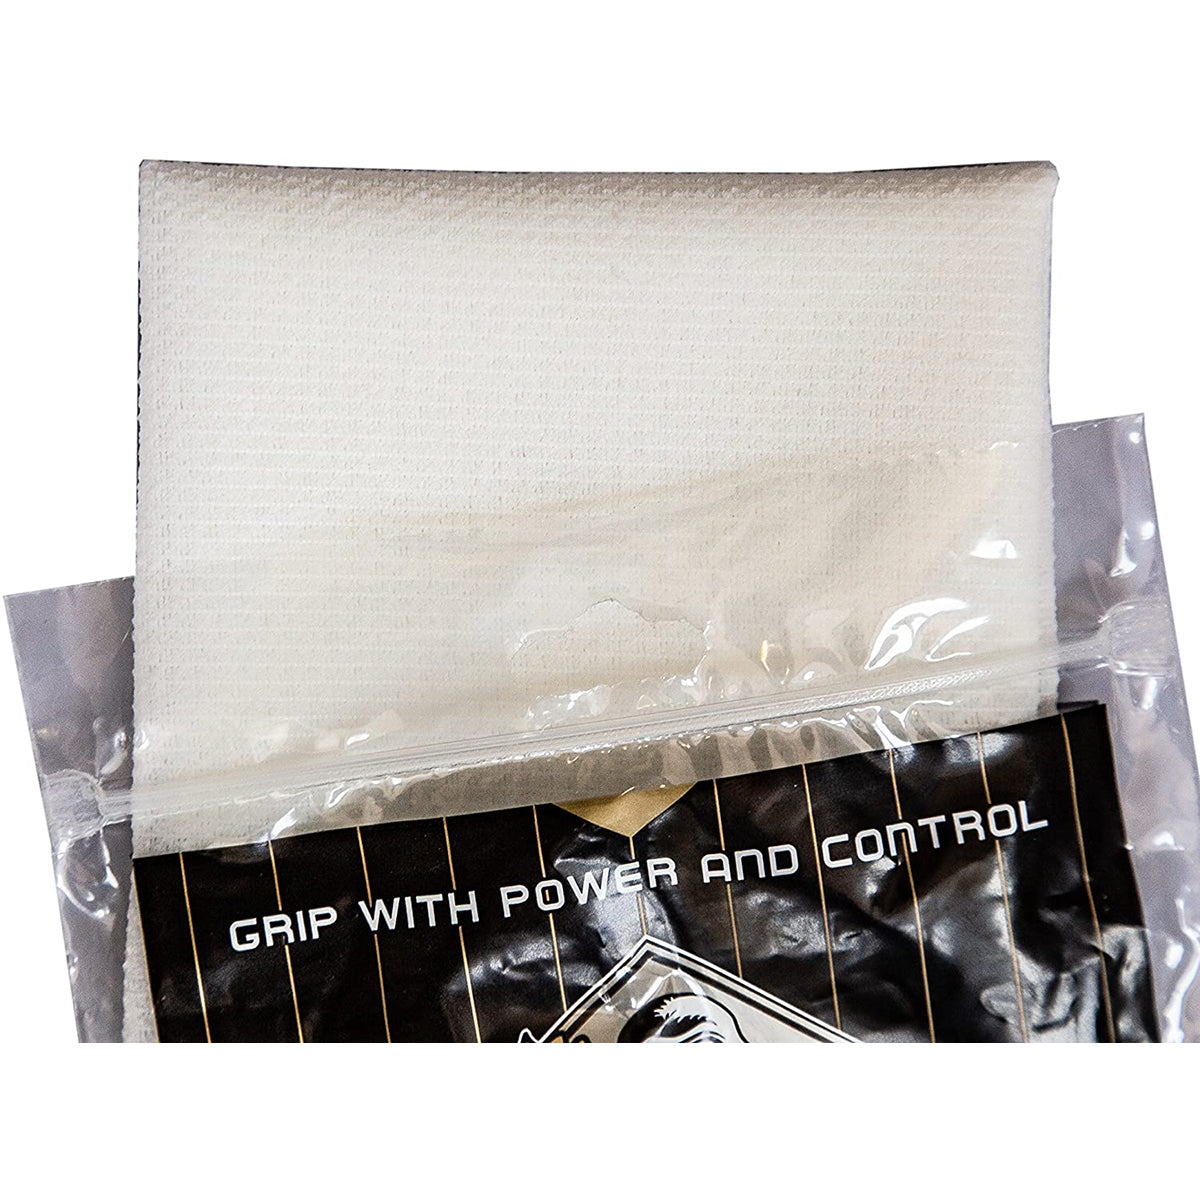 Gorilla Gold Reusable Tackifying Golf Grip Enhancer Towel Gorilla Gold